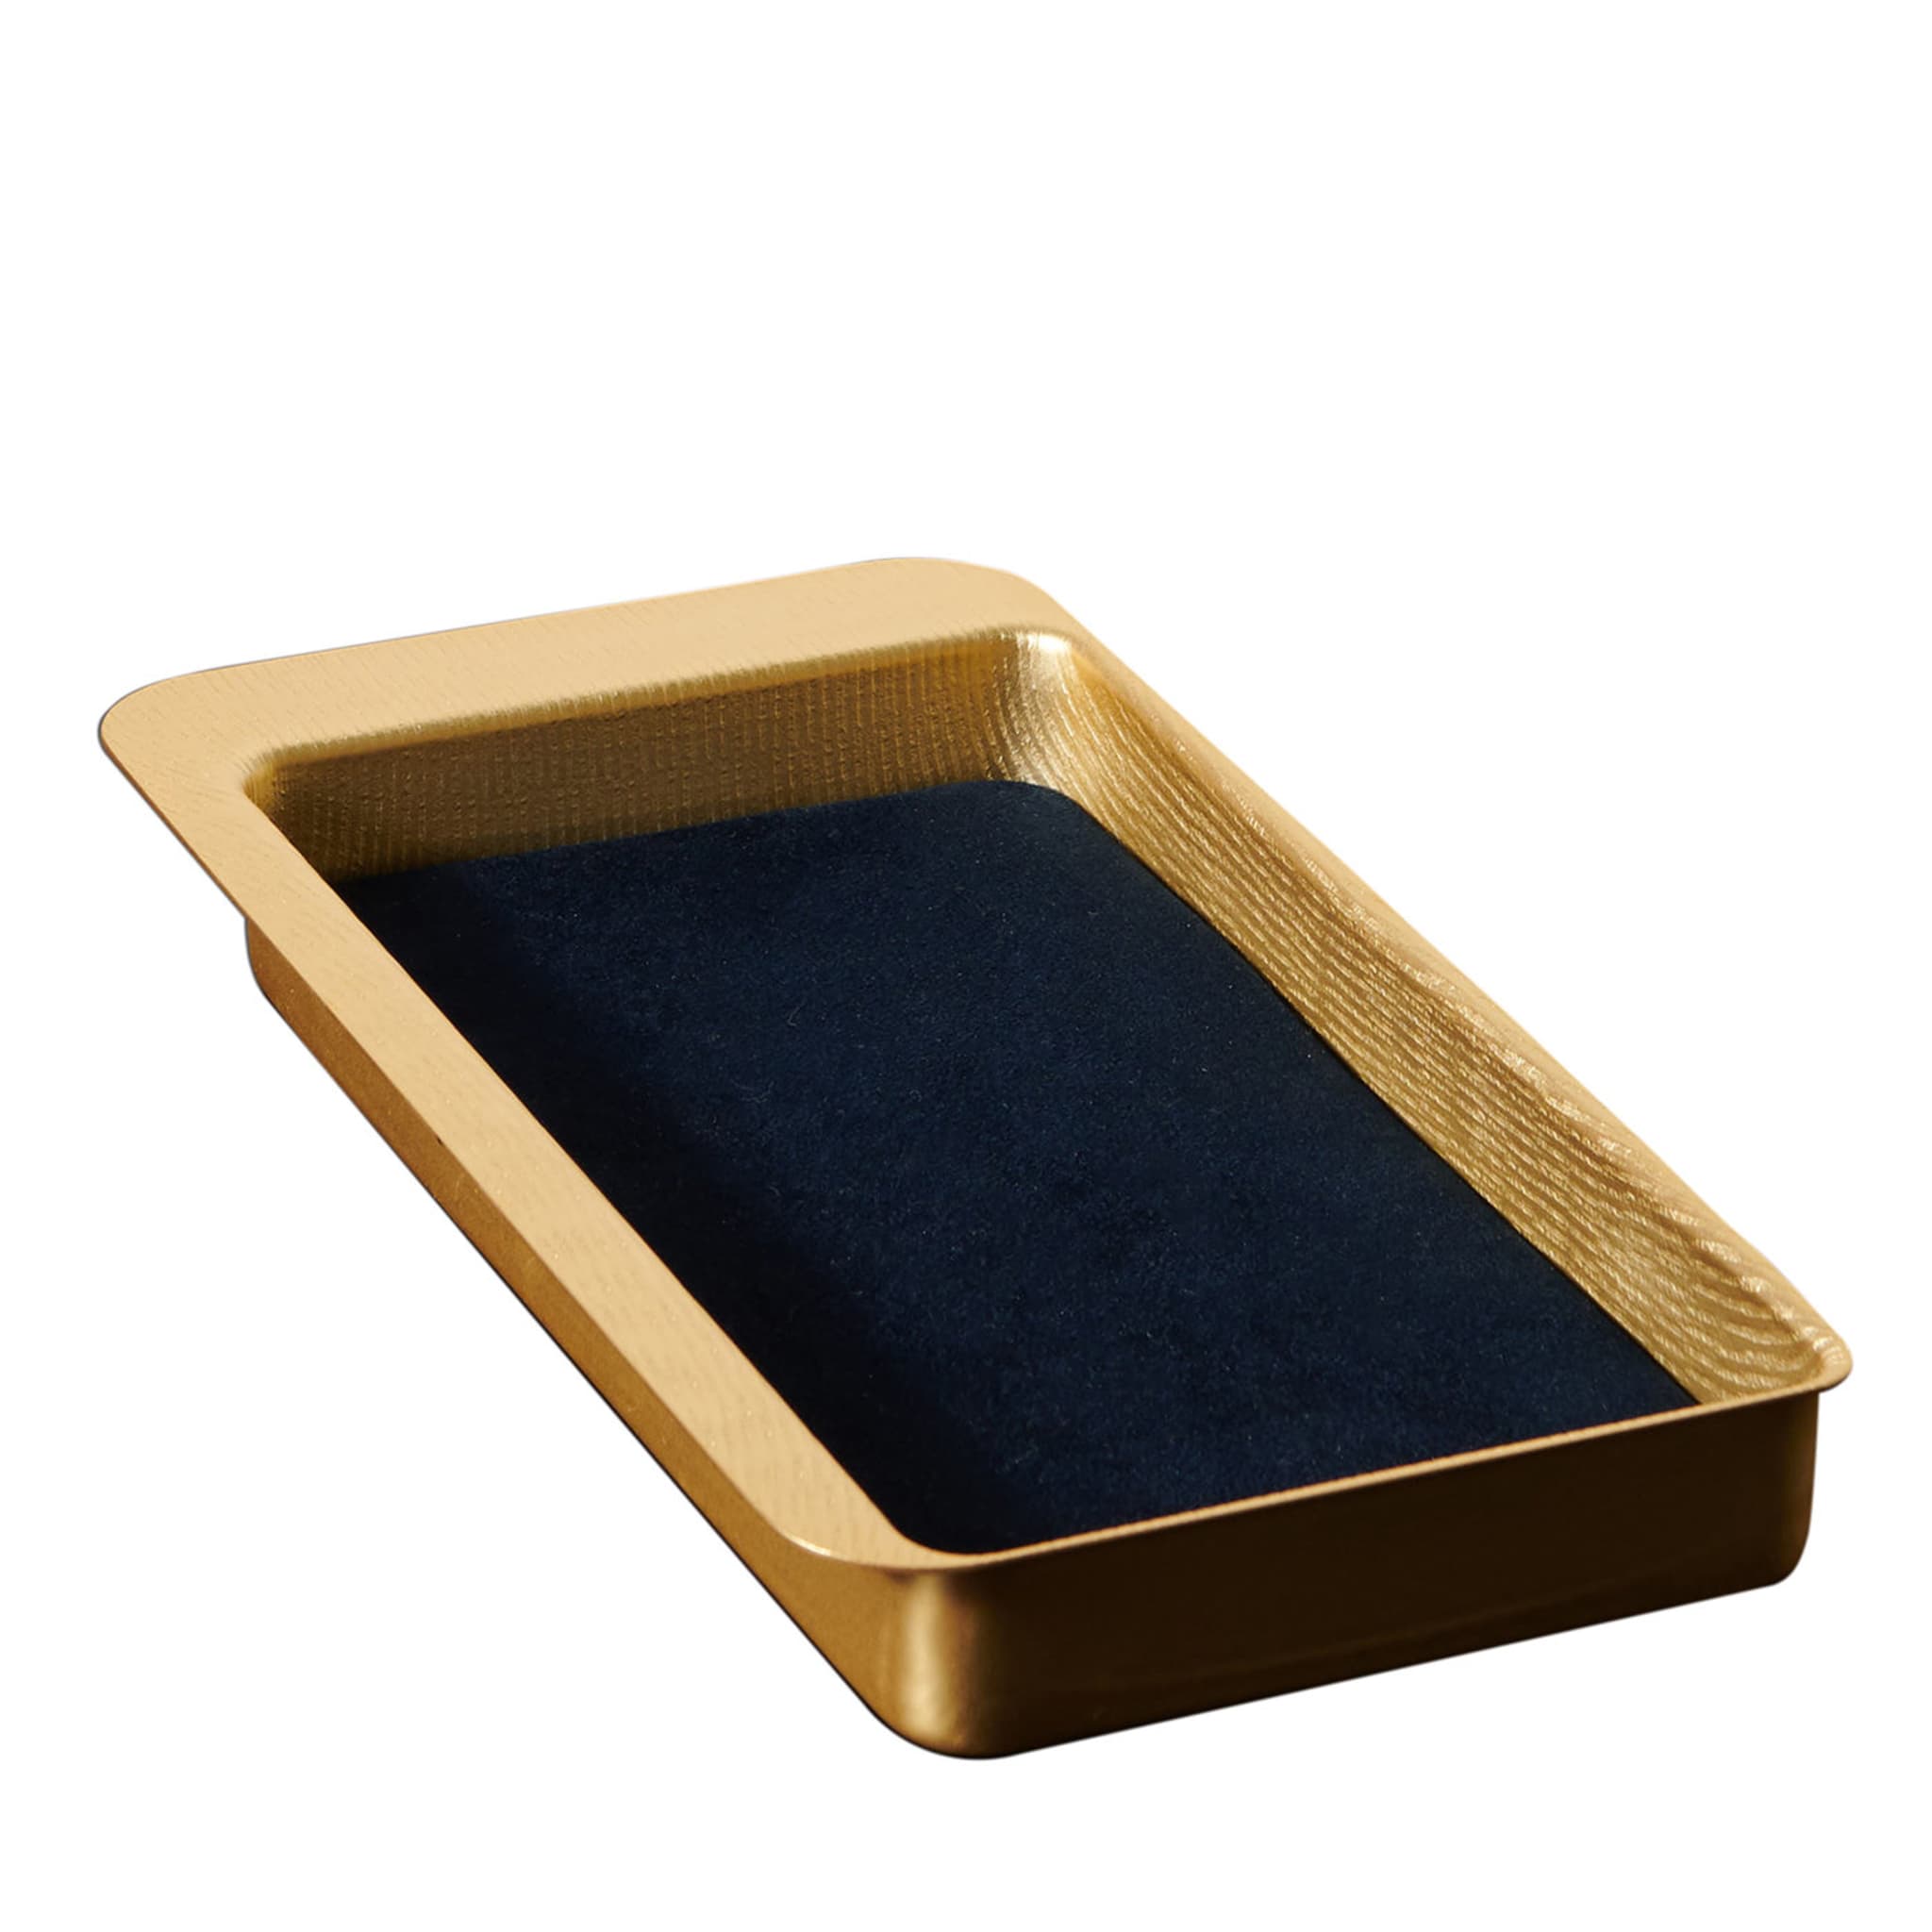 Firenze Vassoio rettangolare a tasca vuota oro e blu - Vista principale